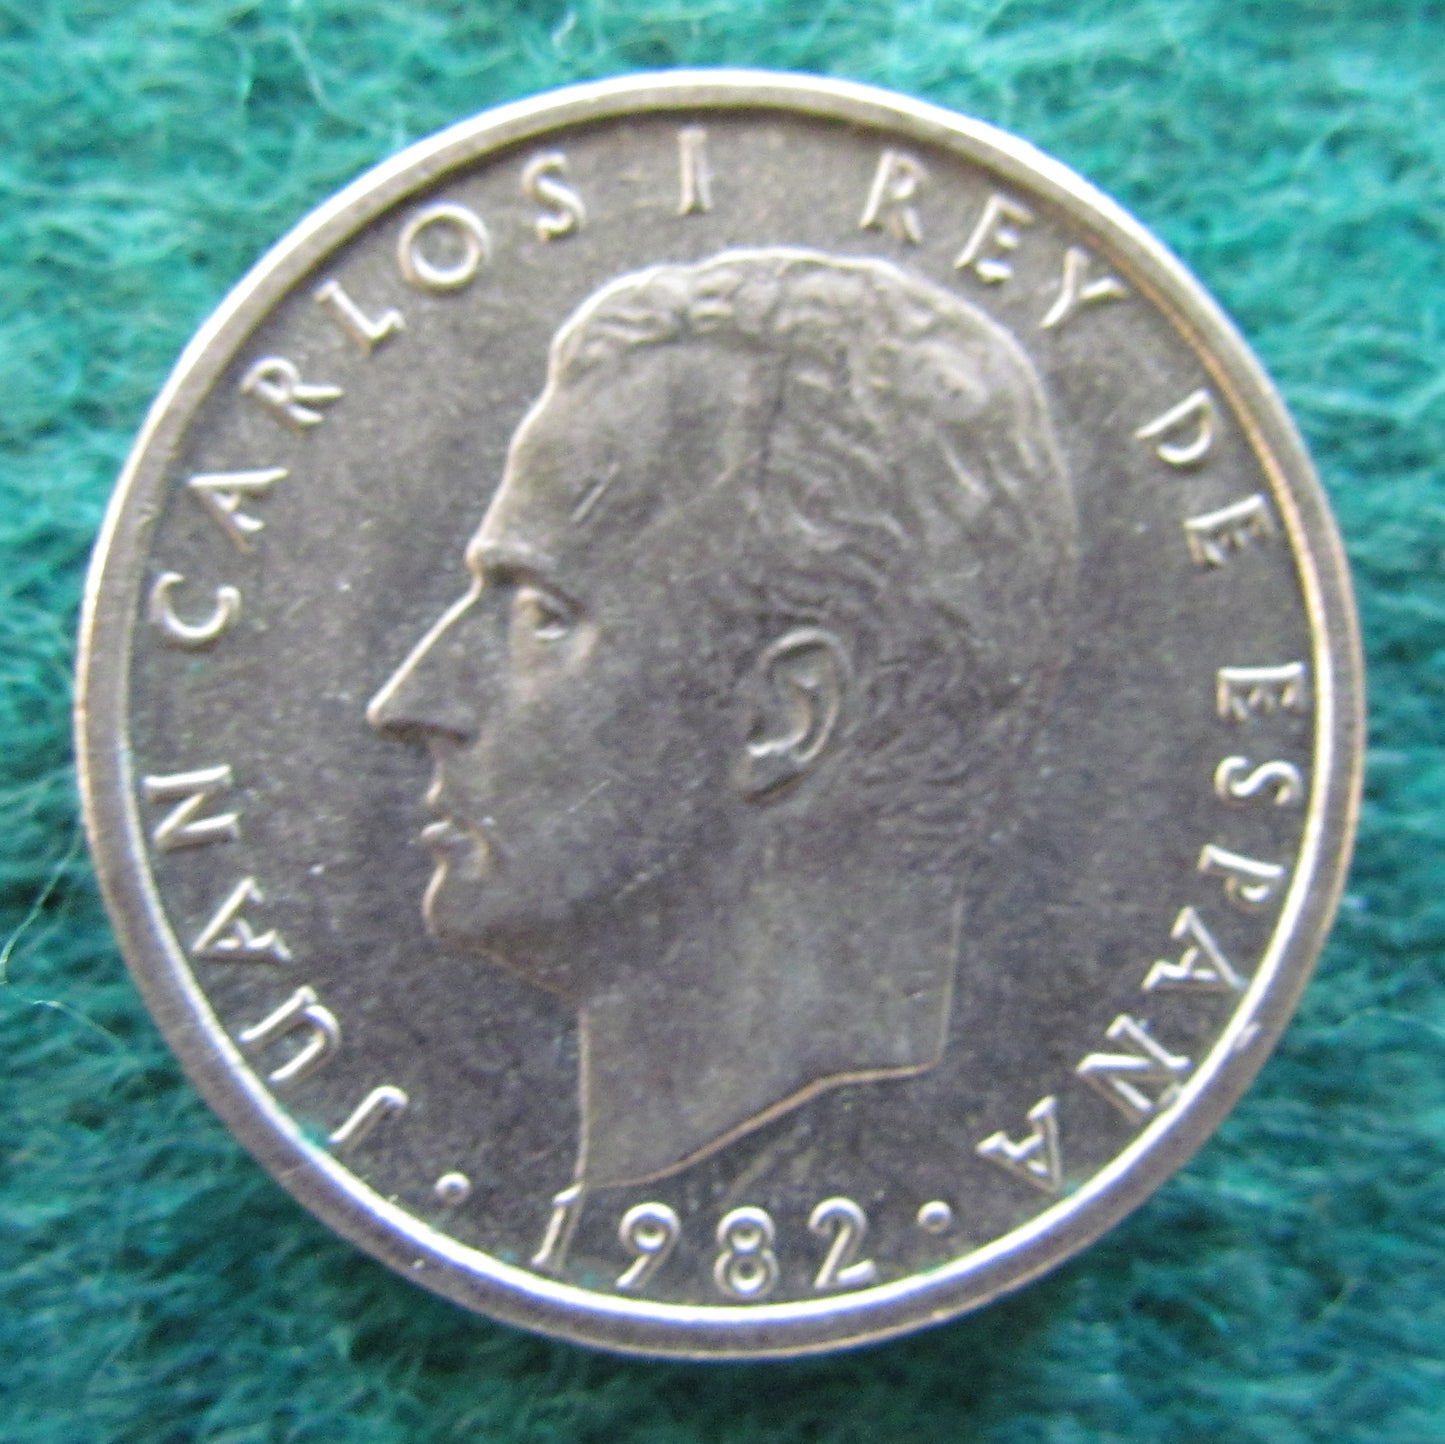 Spanish 1982 100 Pesetas Coin - Circulated